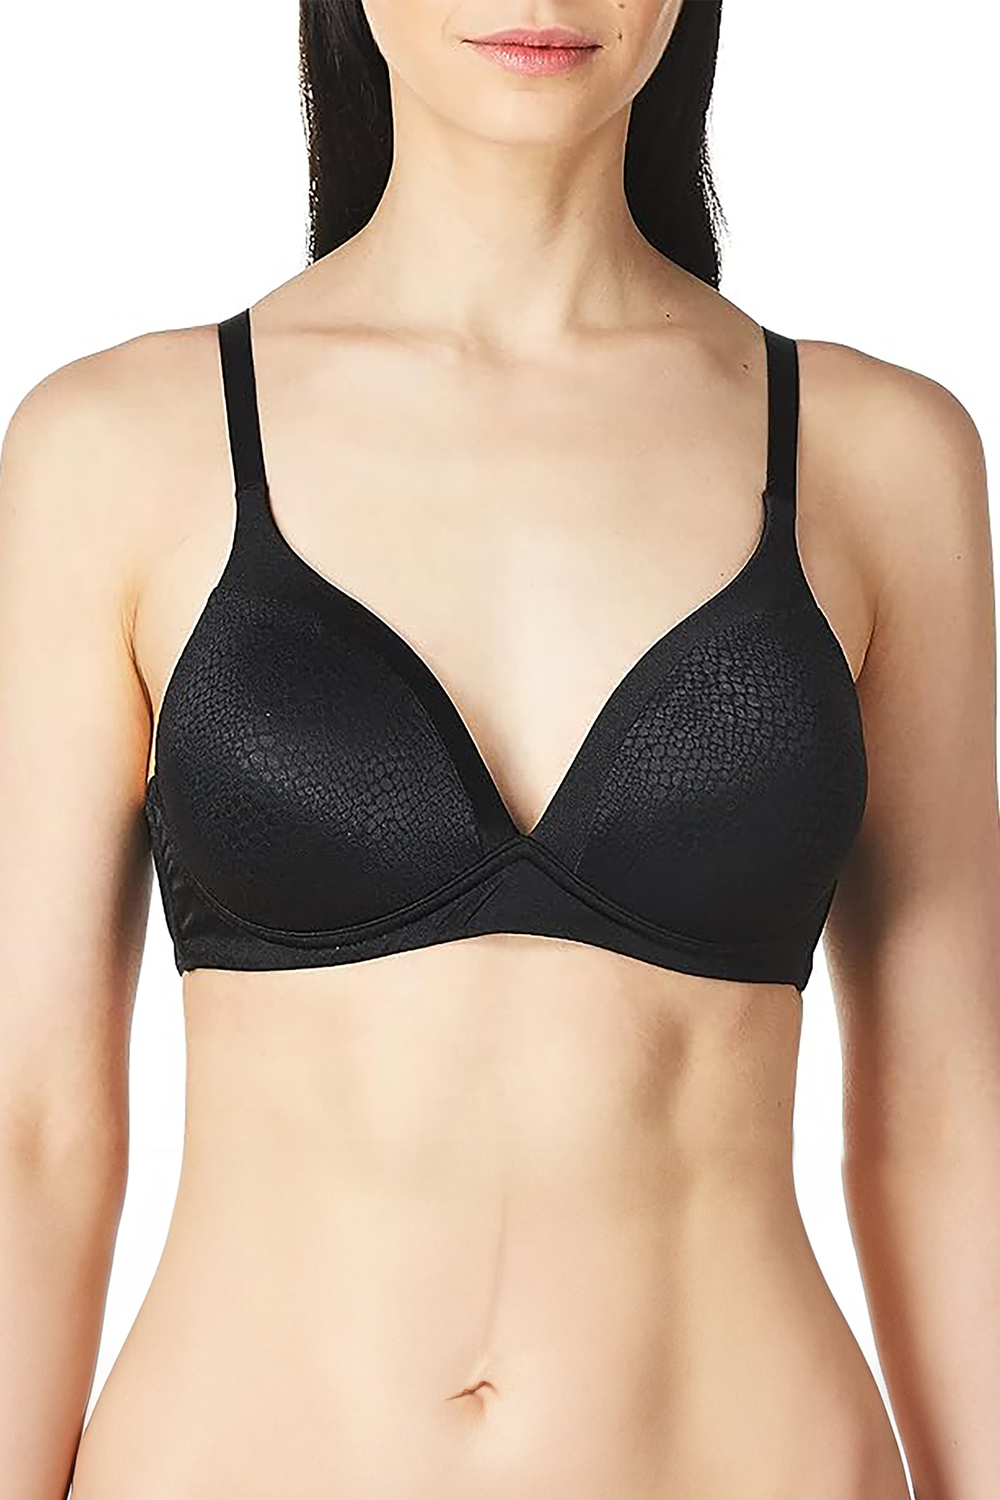 Warners - Blissful Benefits ultrasoft wire-free bra. Colour: black